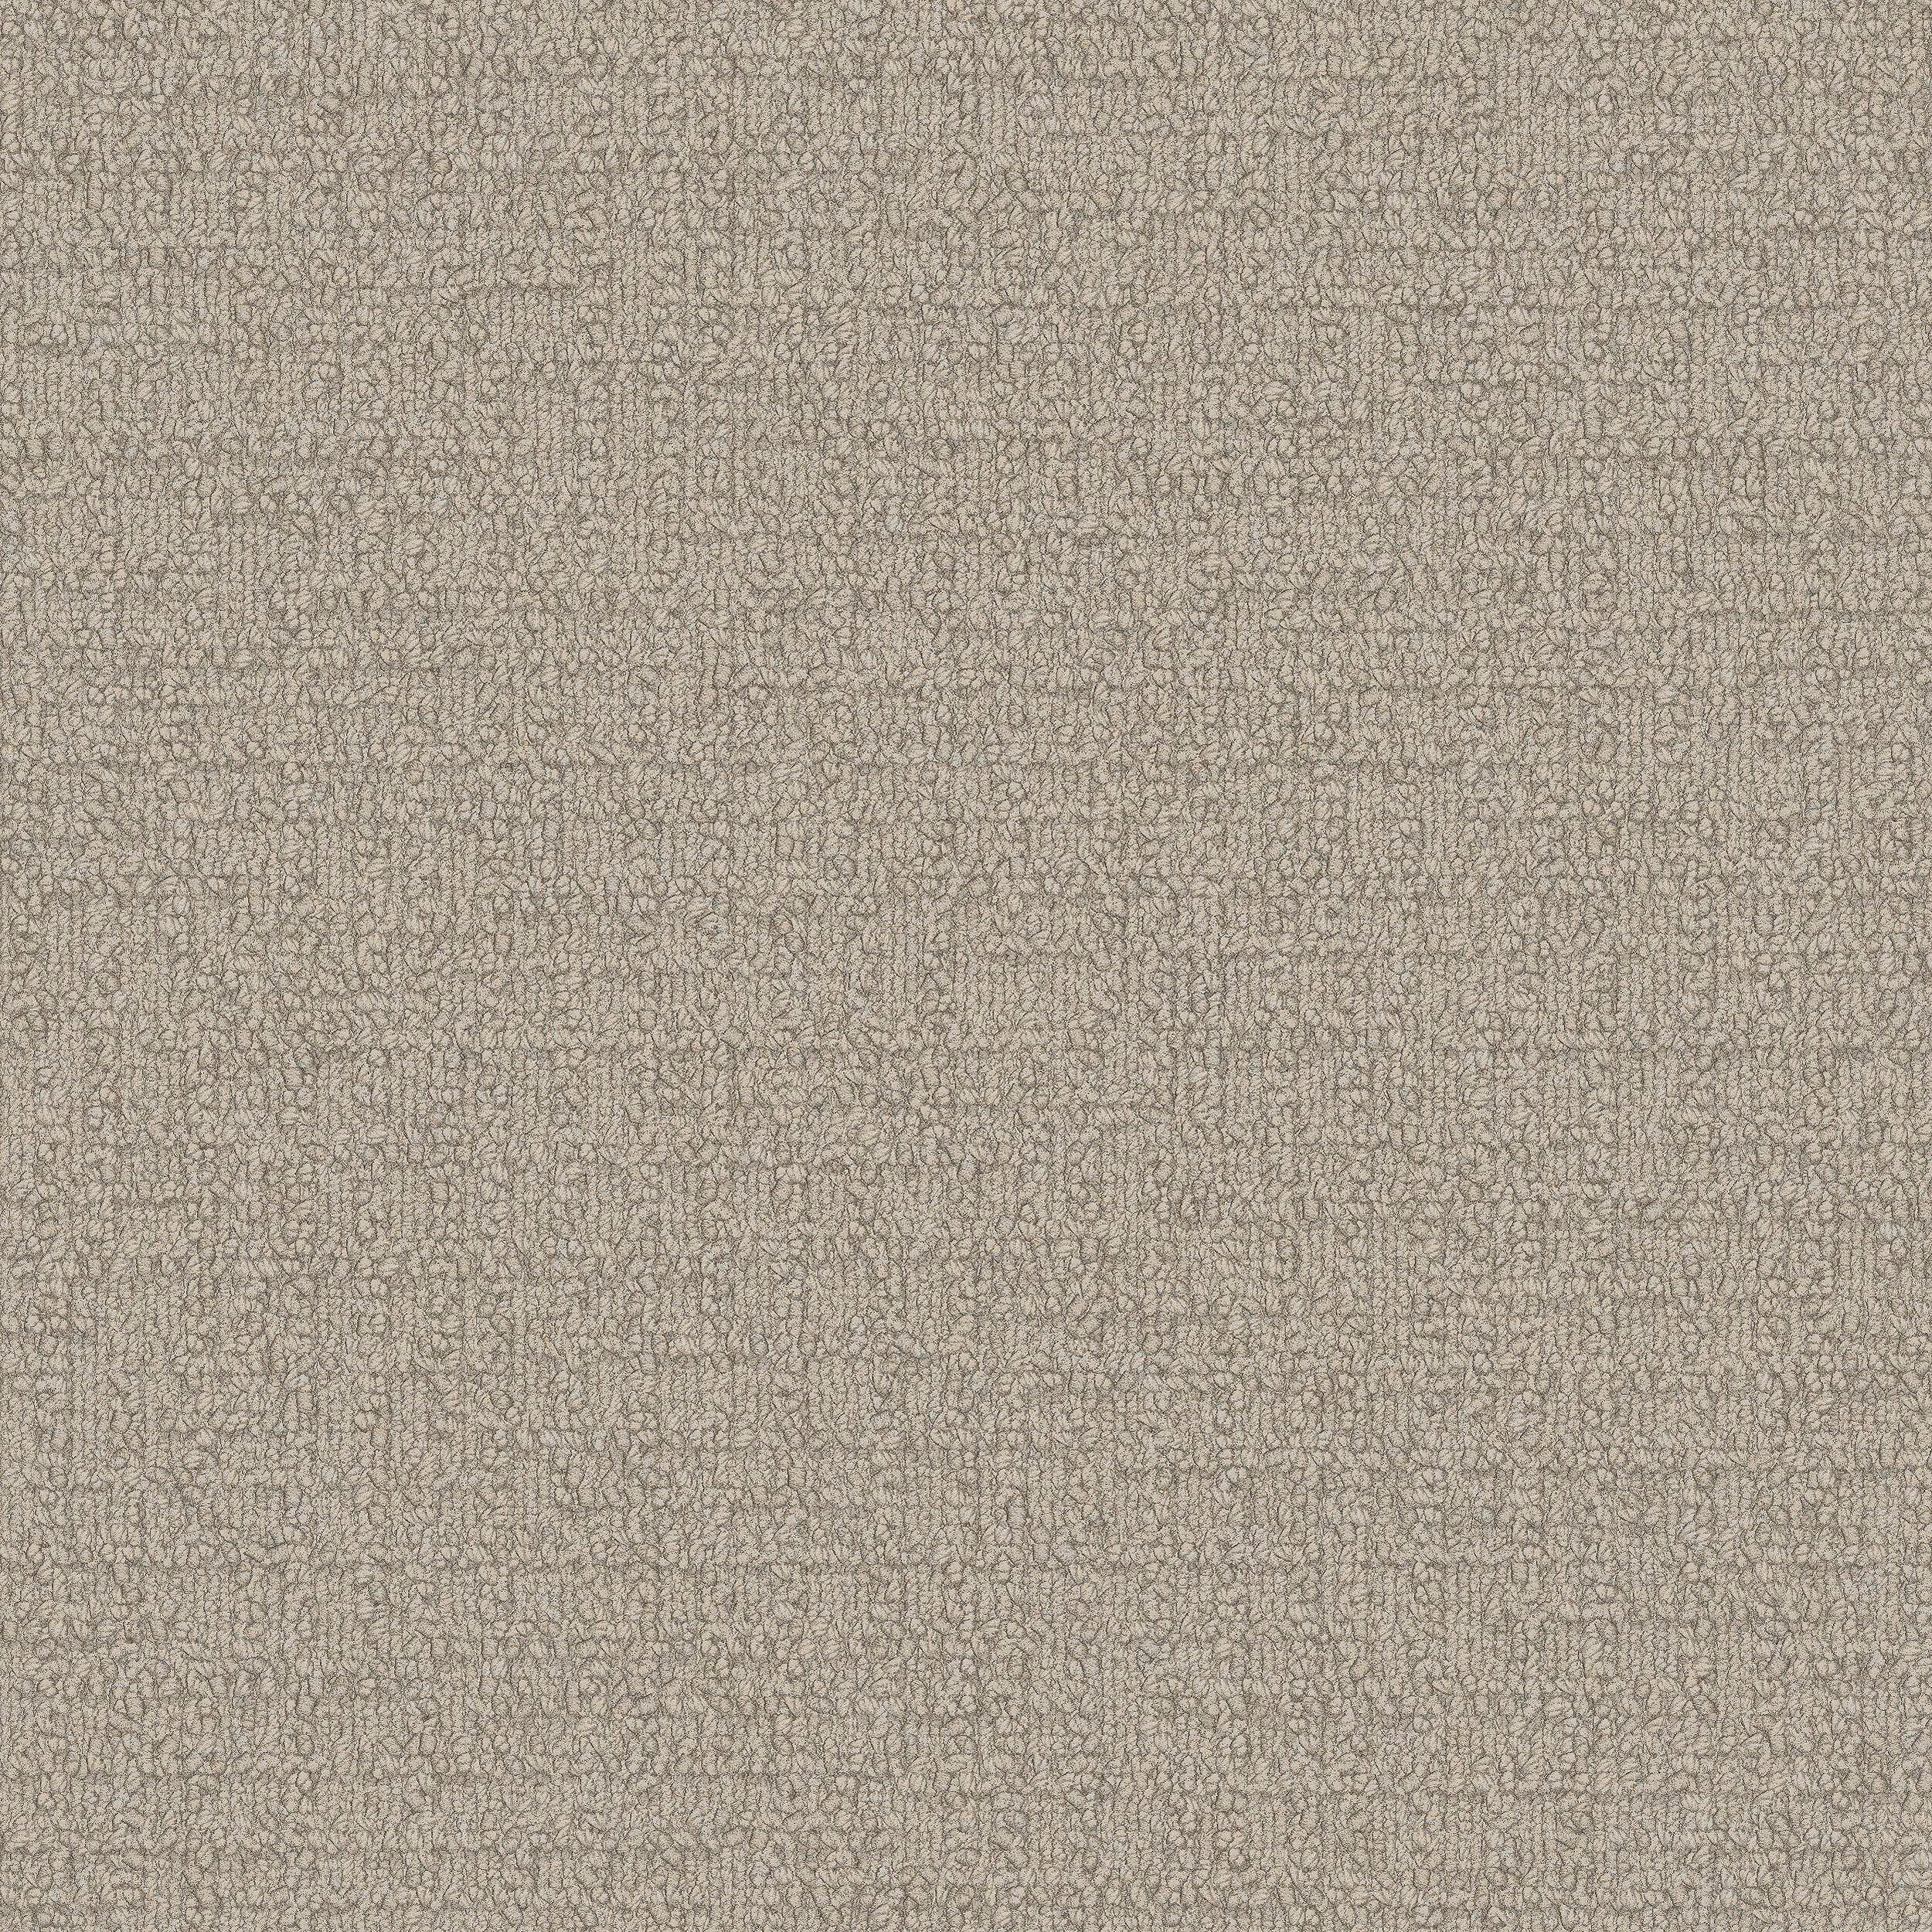 Monochrome Carpet Tile In Cream imagen número 9